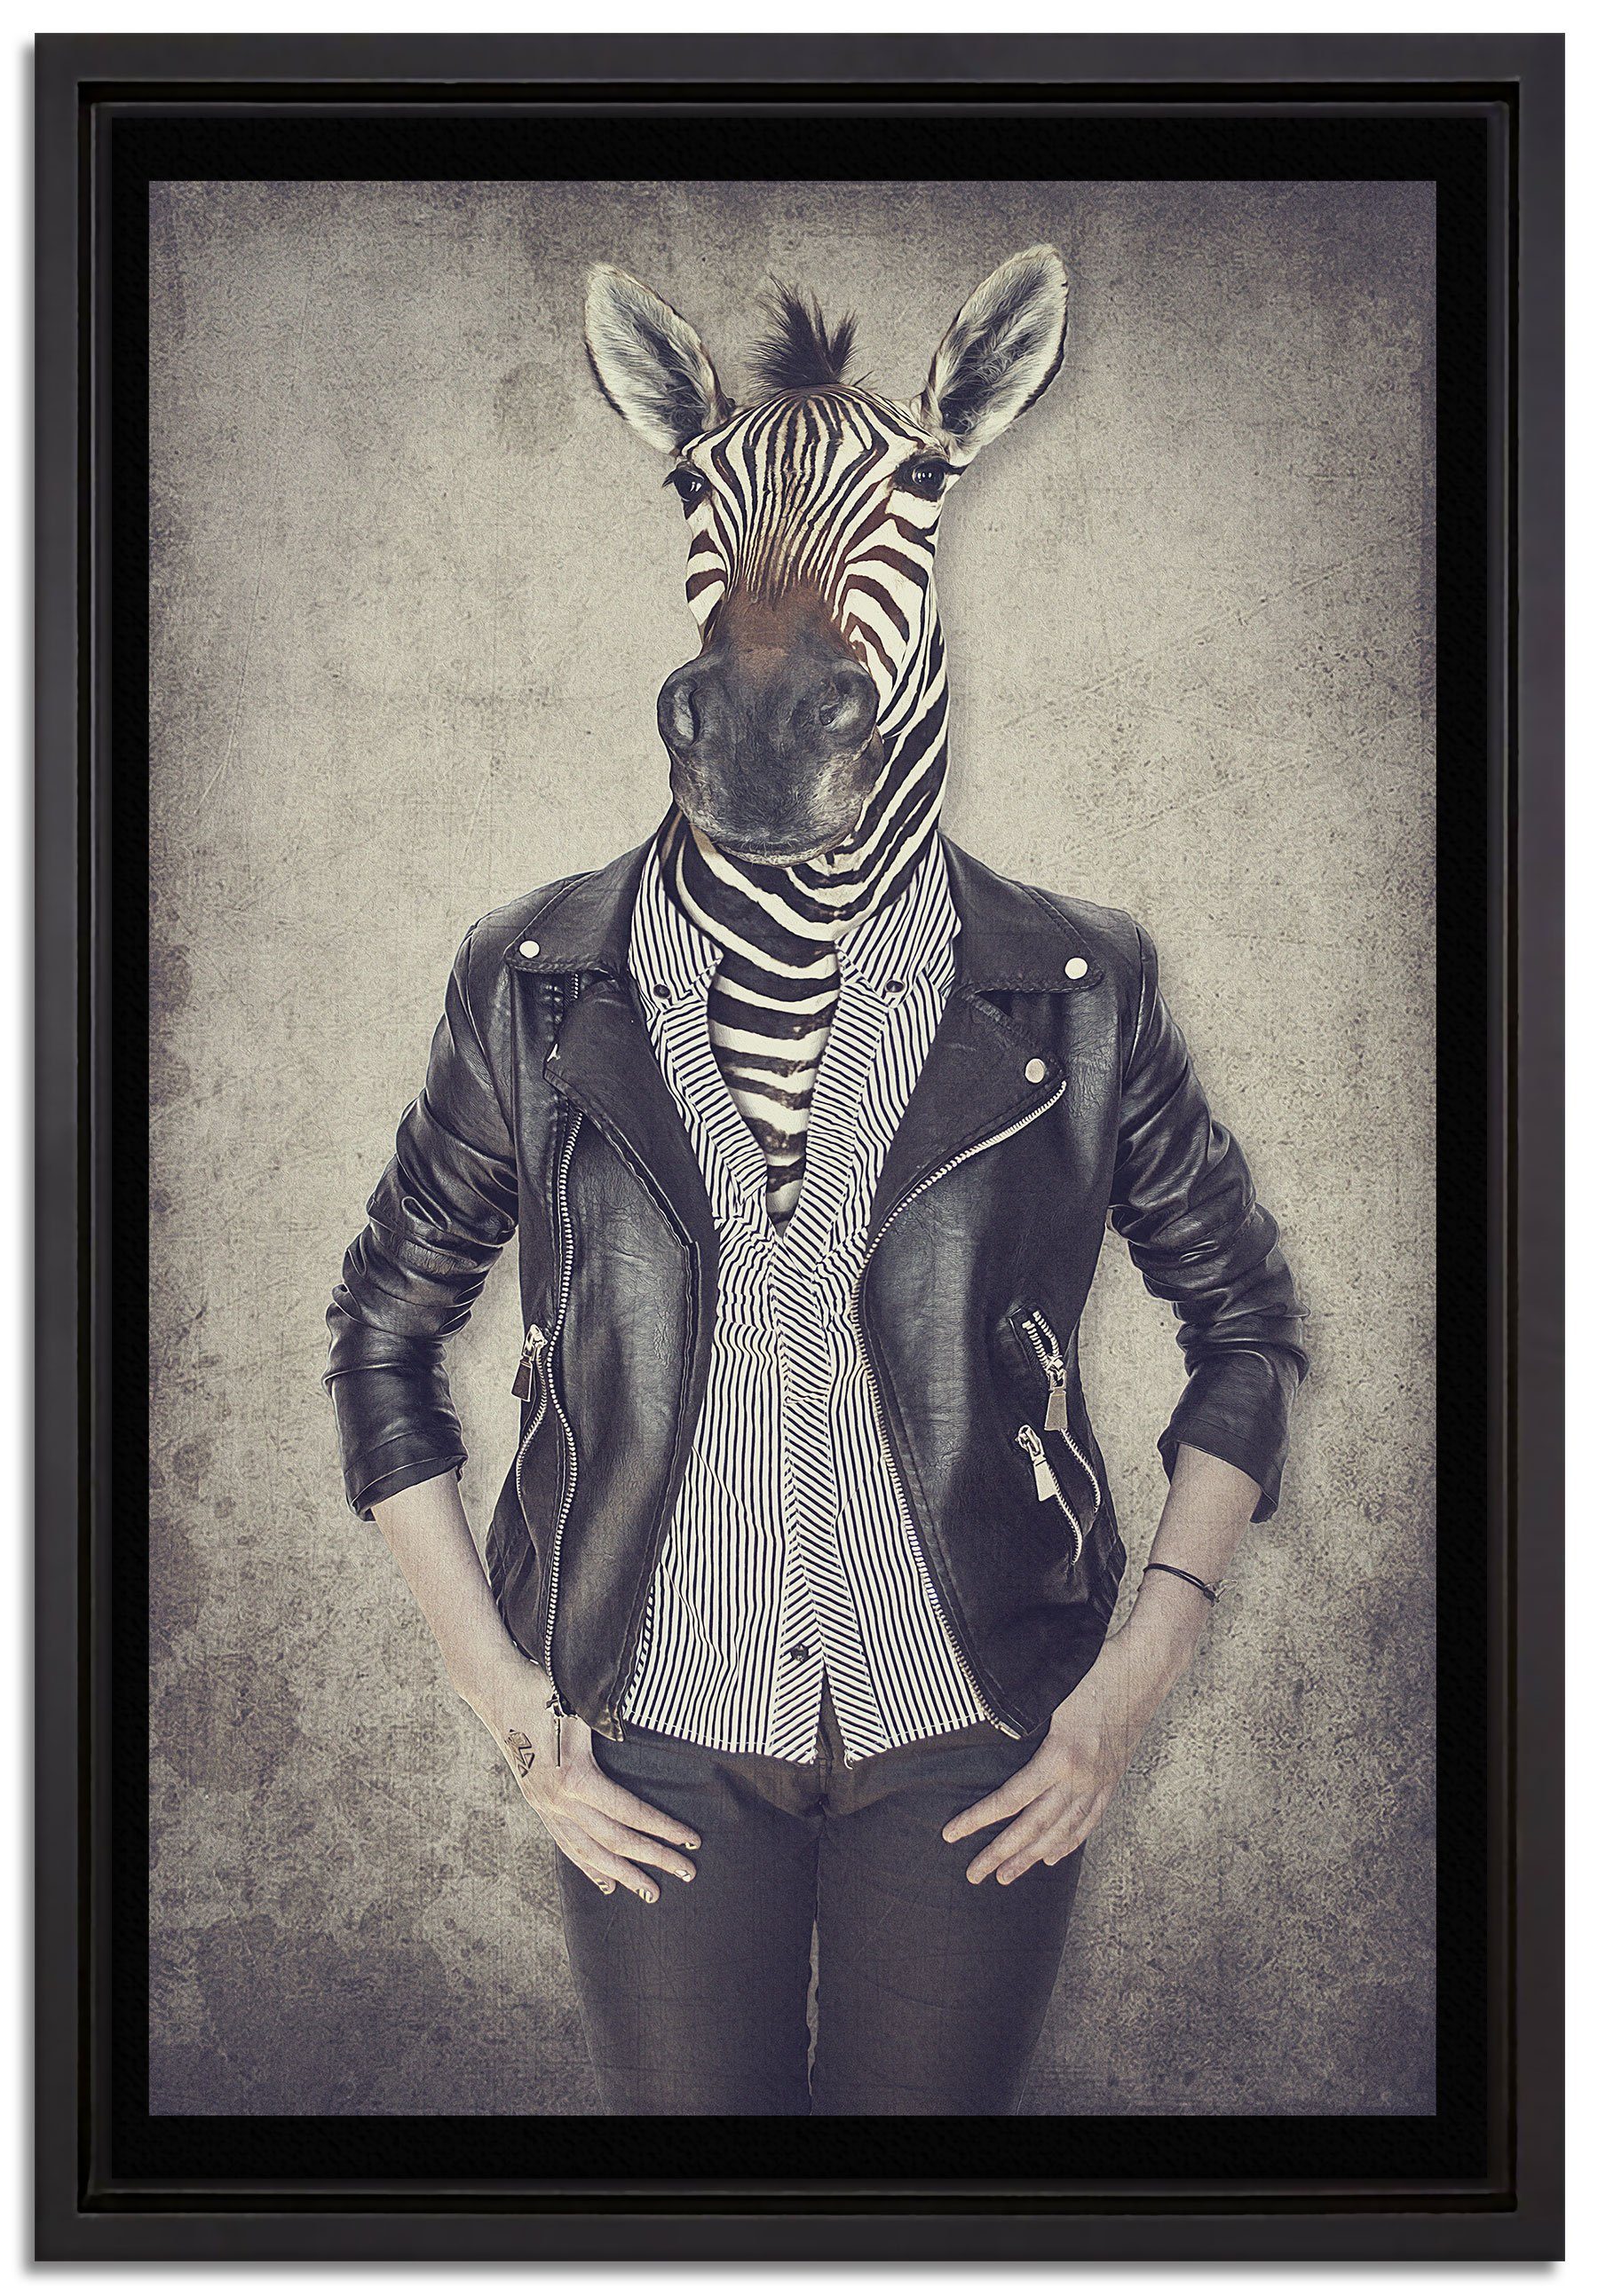 Pixxprint Leinwandbild Zebrakopf Menschenkörper mit Lederjacke, Wanddekoration (1 St), Leinwandbild fertig bespannt, in einem Schattenfugen-Bilderrahmen gefasst, inkl. Zackenaufhänger